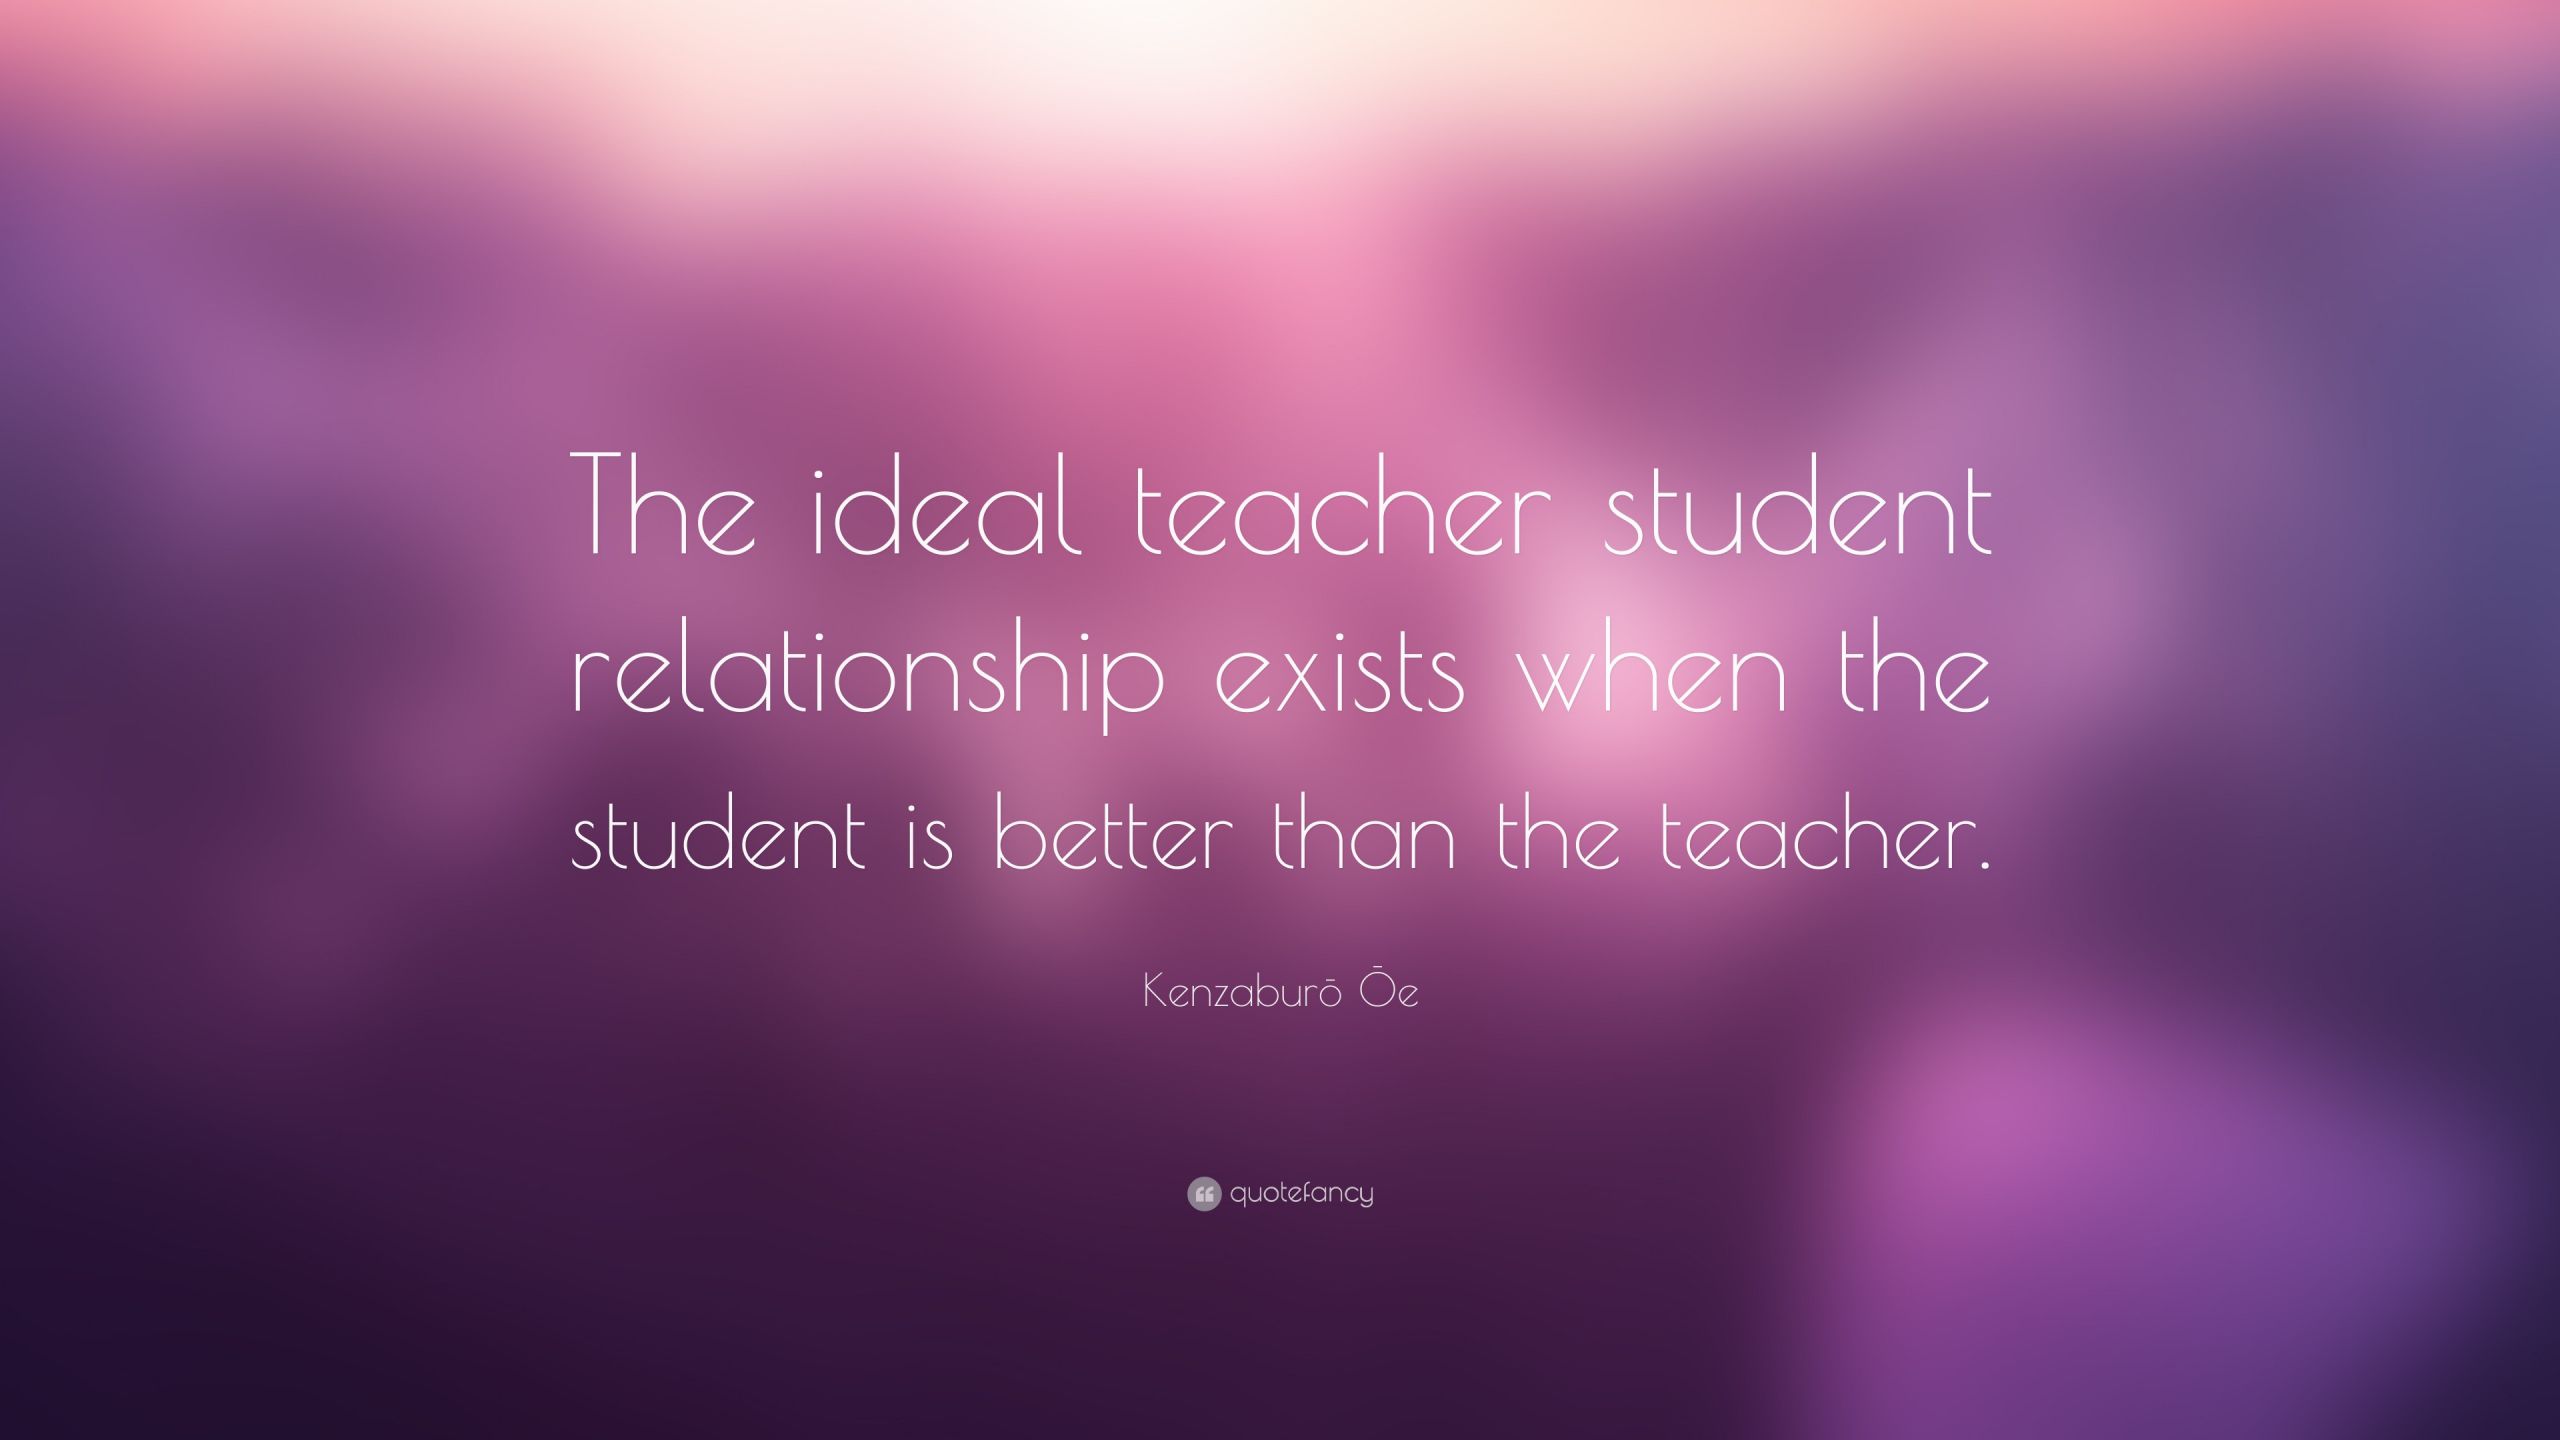 Quotes On Teacher Student Relationship
 Kenzaburō Ōe Quote “The ideal teacher student